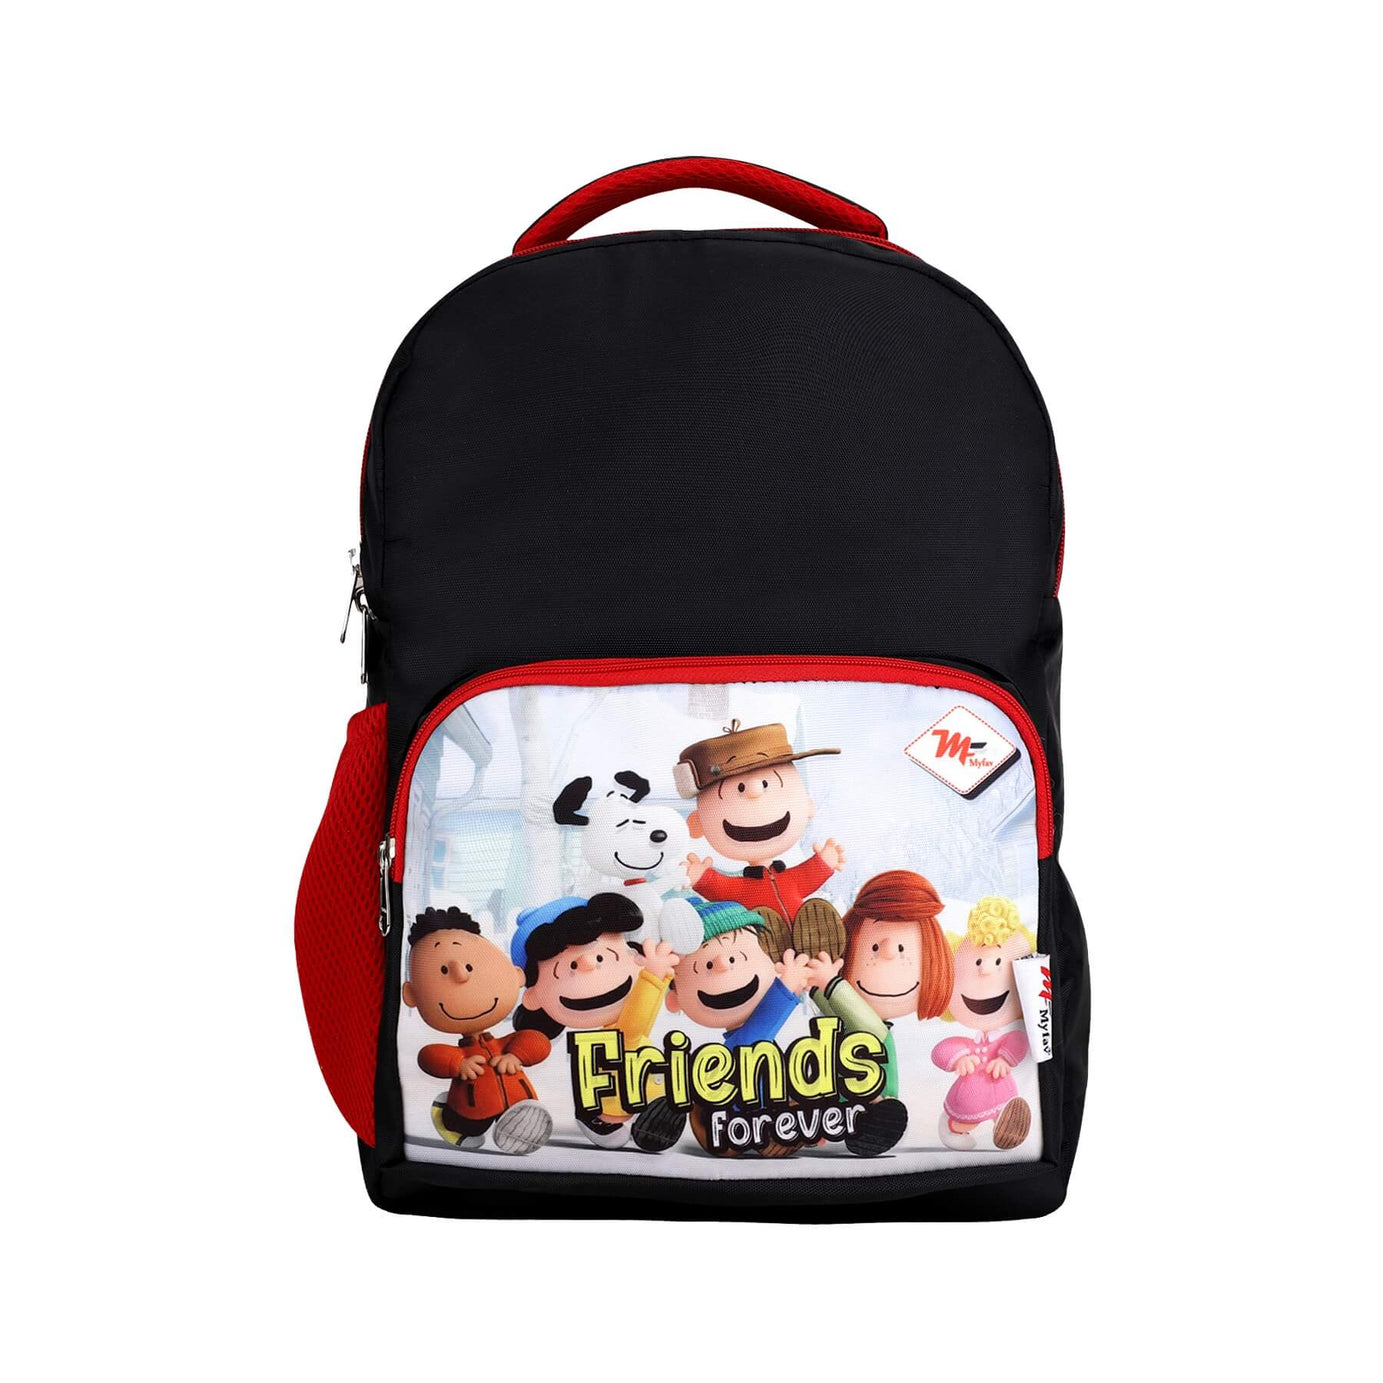 My Fav Friend Forever Kids School Bag For Girls/Boys, School, Casual, Picnic, Nursery-(2 to 10 year Old Kid)